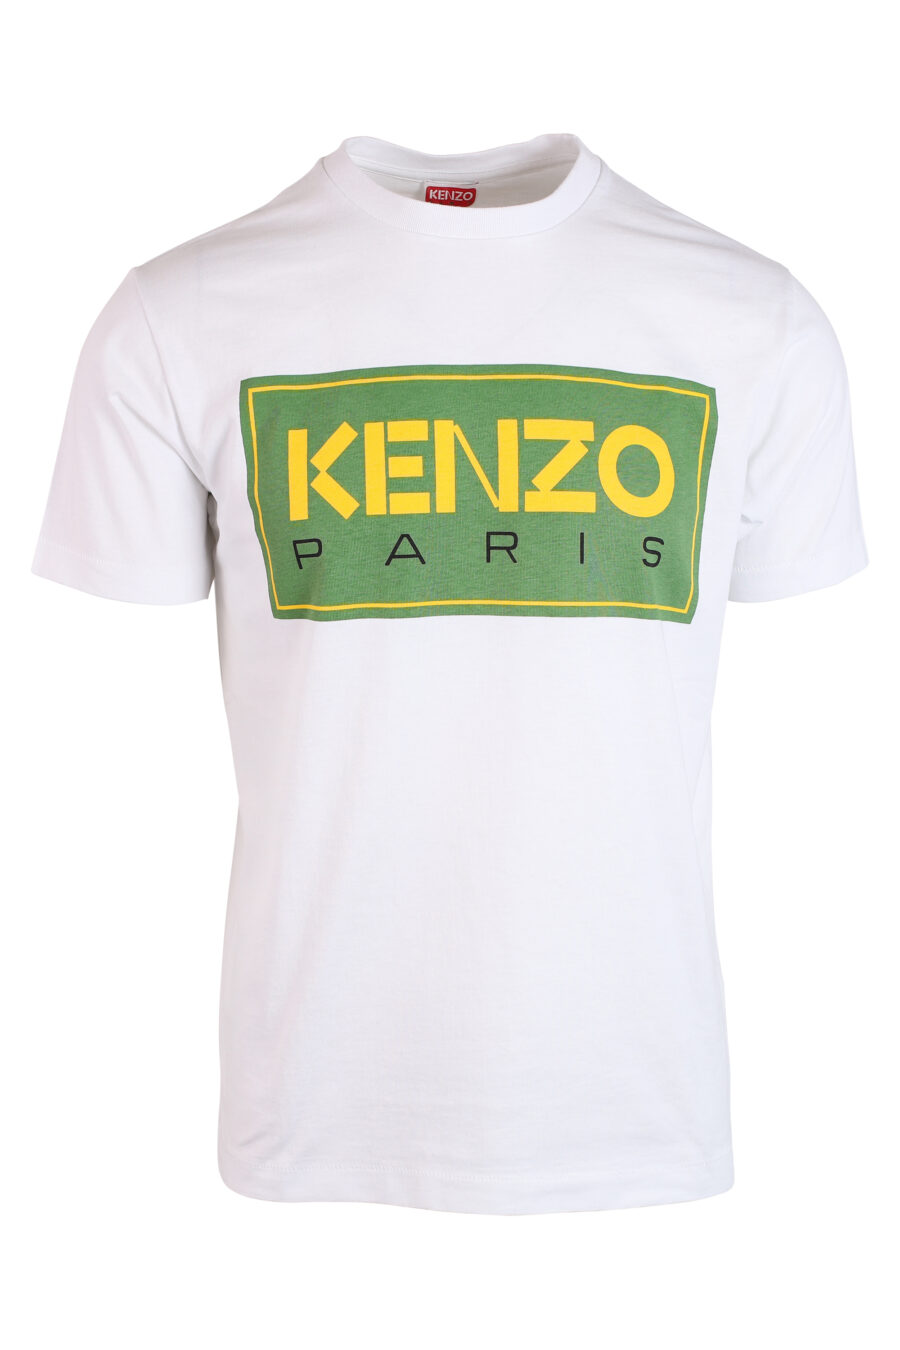 Weißes T-Shirt mit grünem Maxilogo "paris classic" - IMG 3263